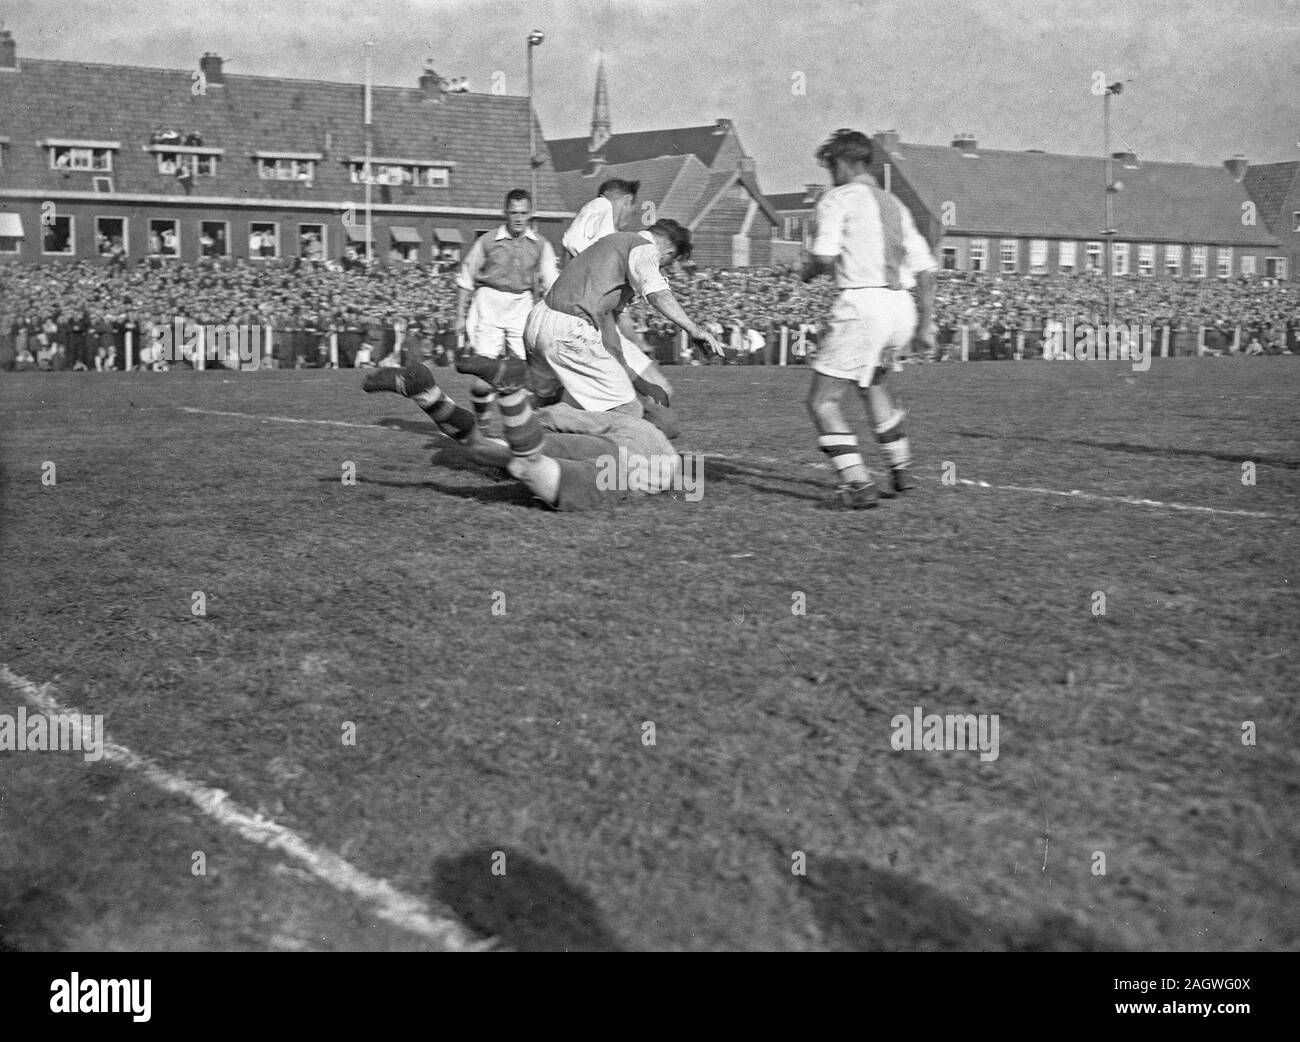 1940 Men's match de foot - Volewijckers - Ajax 1-0. Ajax keeper Keizer lance pour la prochaine attaque Volewijckers (Octobre 10, 1947, Amsterdam) Banque D'Images